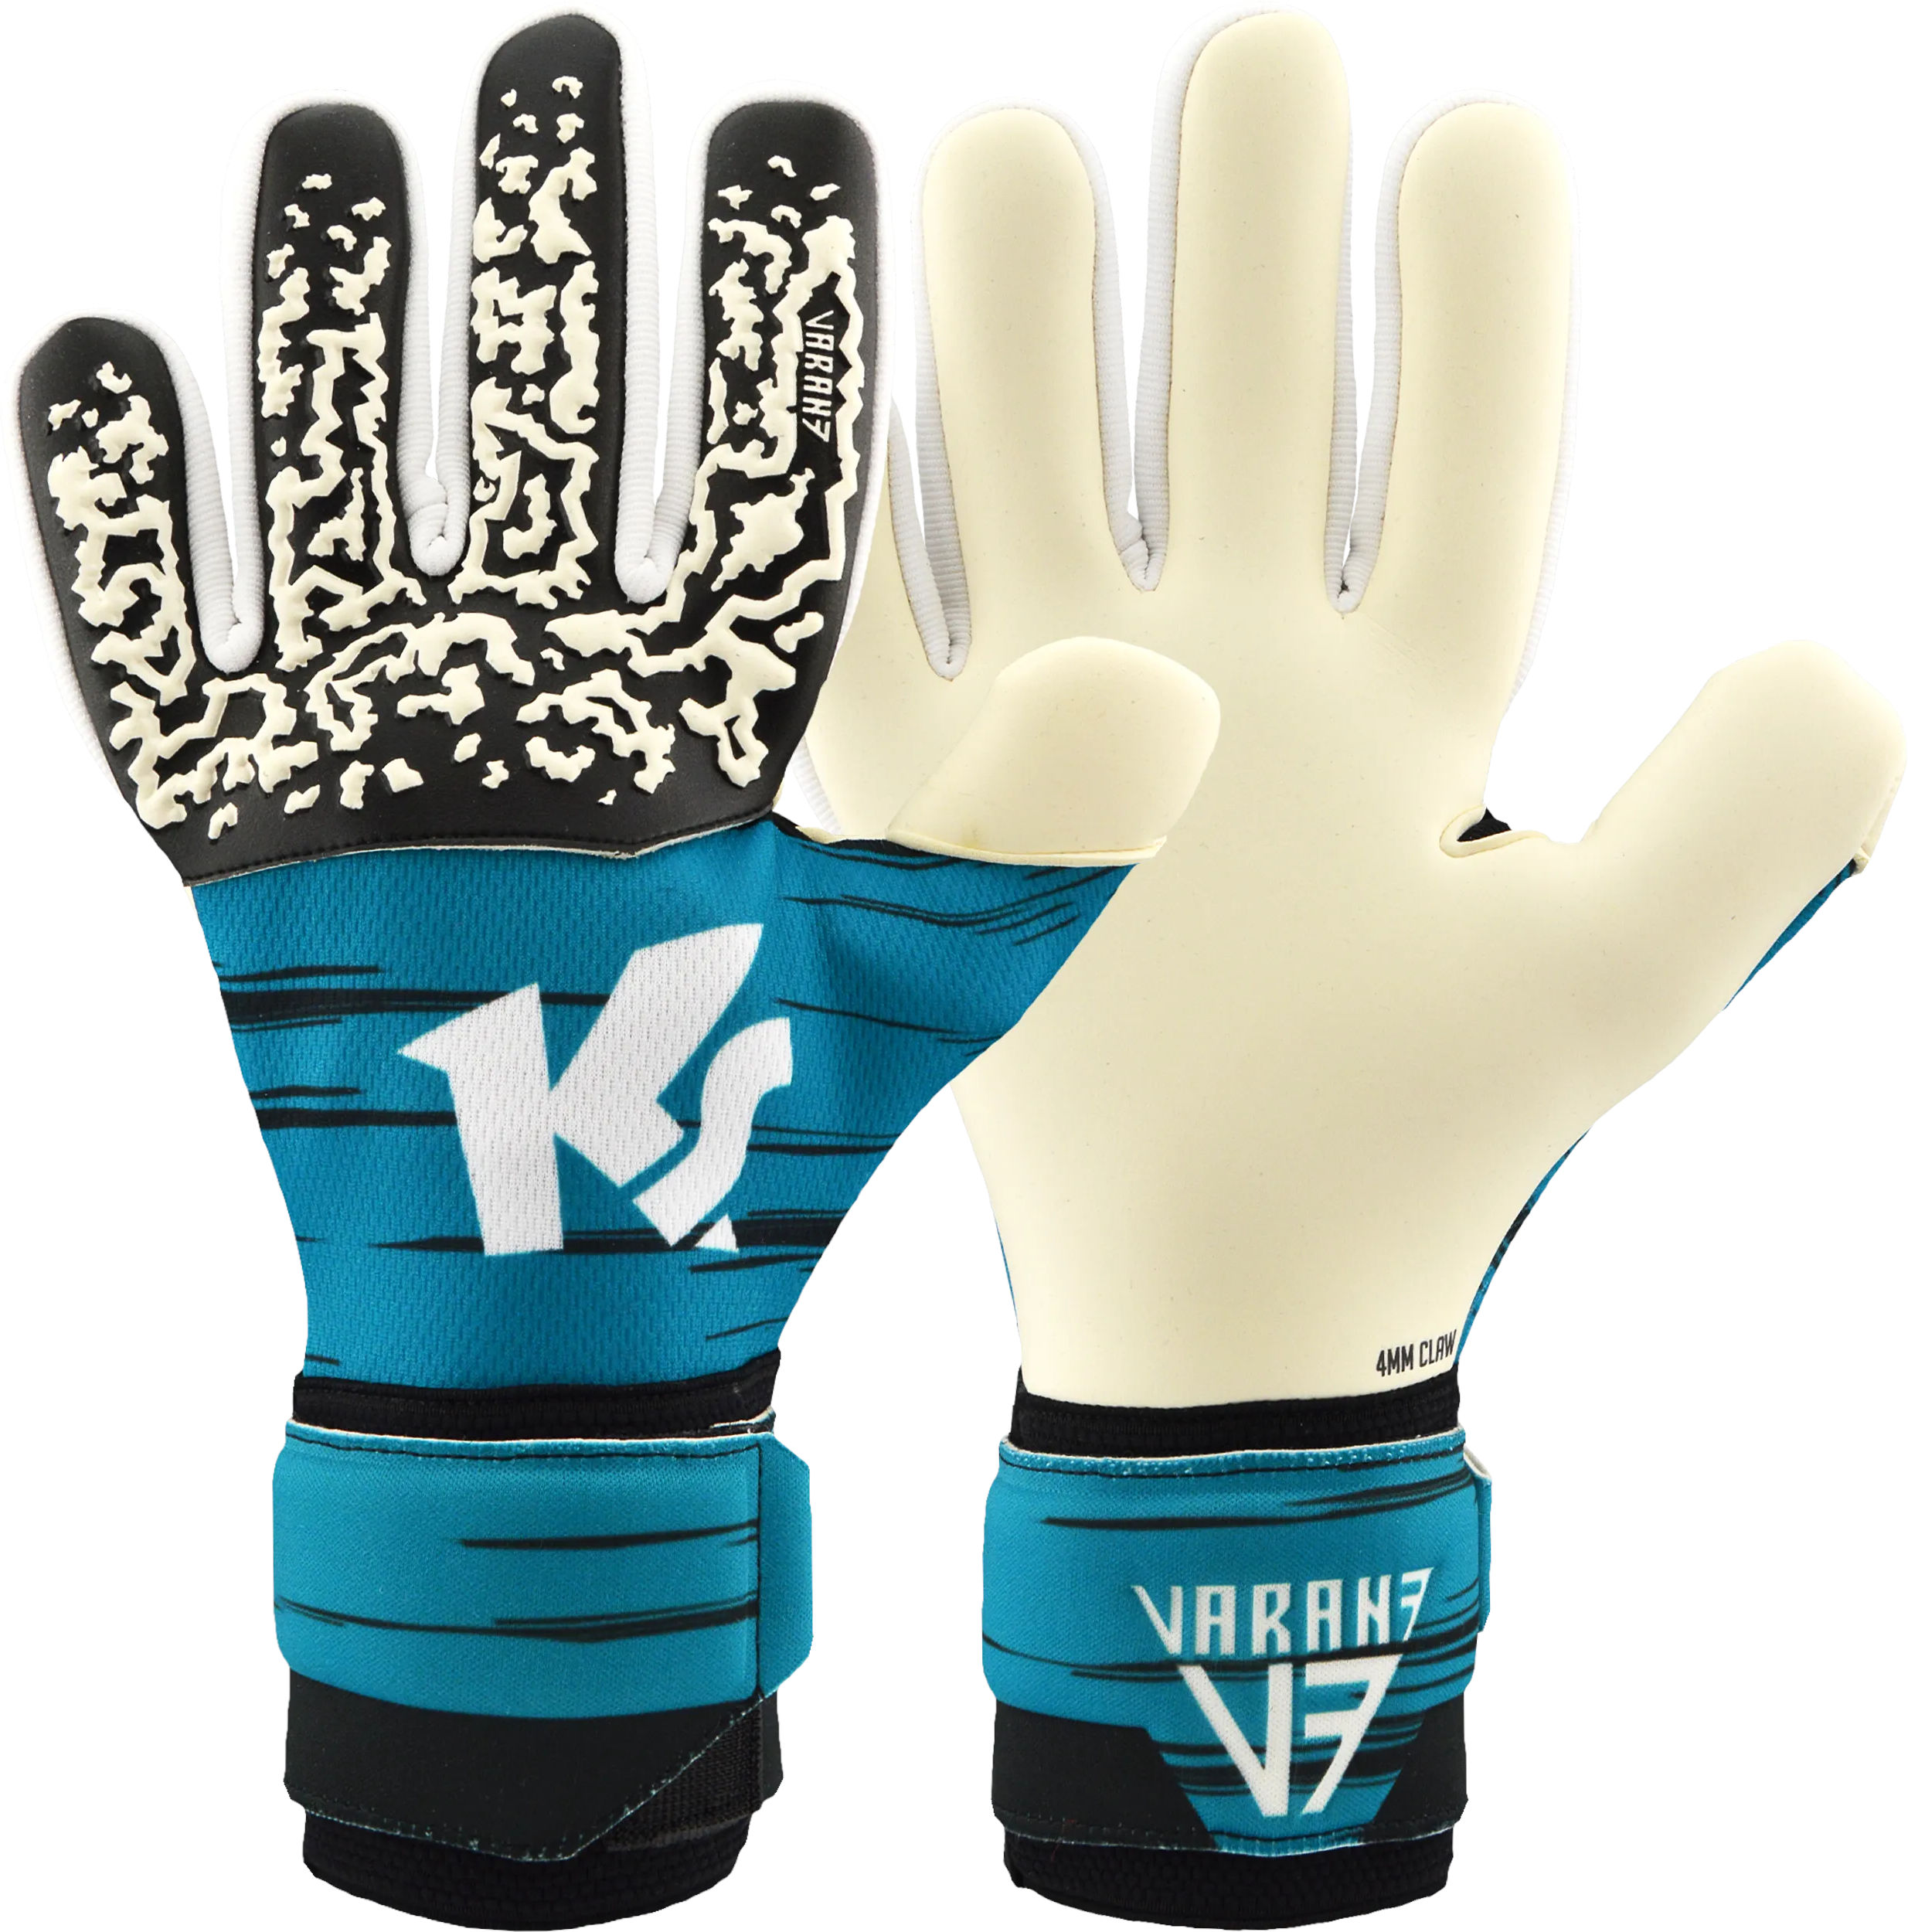 Brankářské rukavice KEEPERsport Varan7 Premier NC